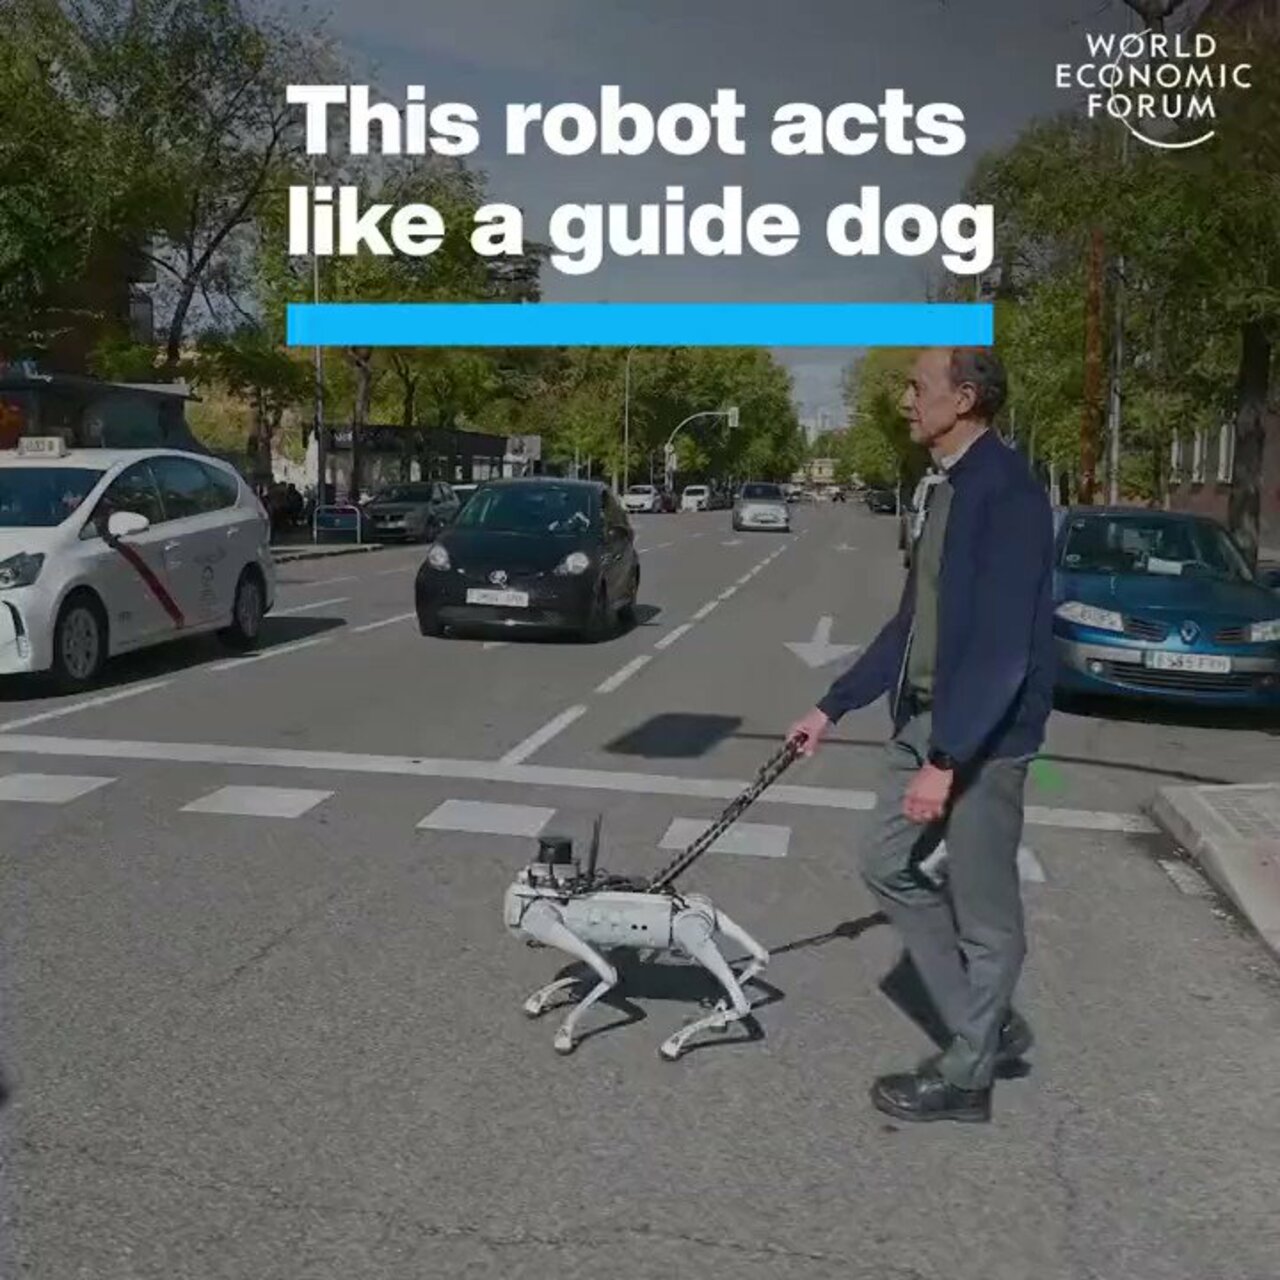 This #Robot acts like a guide dog by @wef #AI #ArtificialIntelligence #MI #Robotics #Engineering #Innovation #FutureOfWork #Tech cc: @ronald_vanloon @pbalakrishnarao @chr1sa https://t.co/HED7UnSHm4